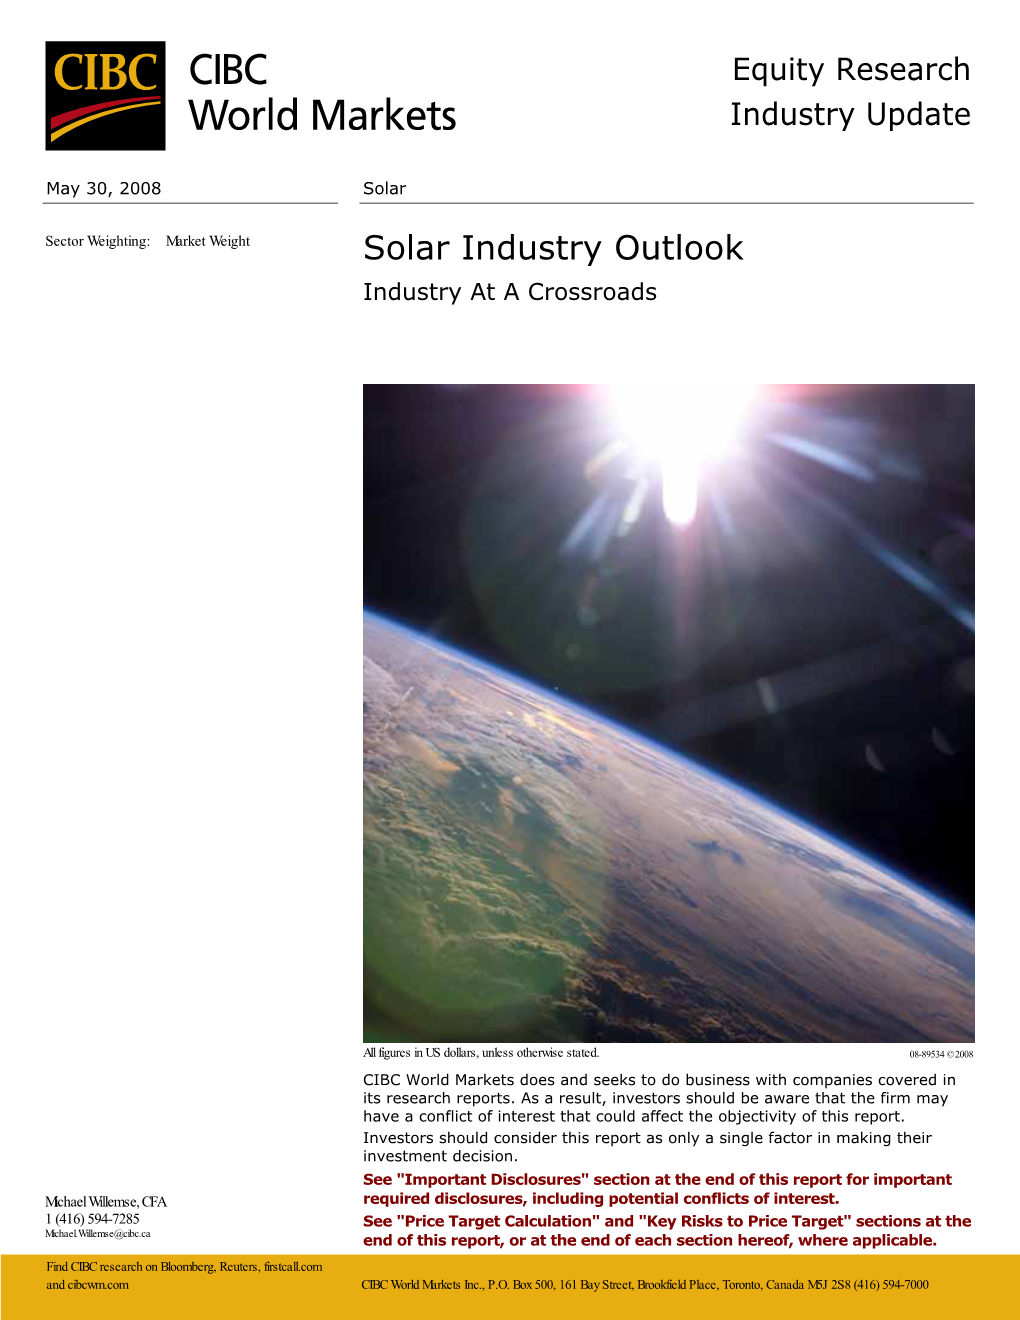 Solar Industry Outlook